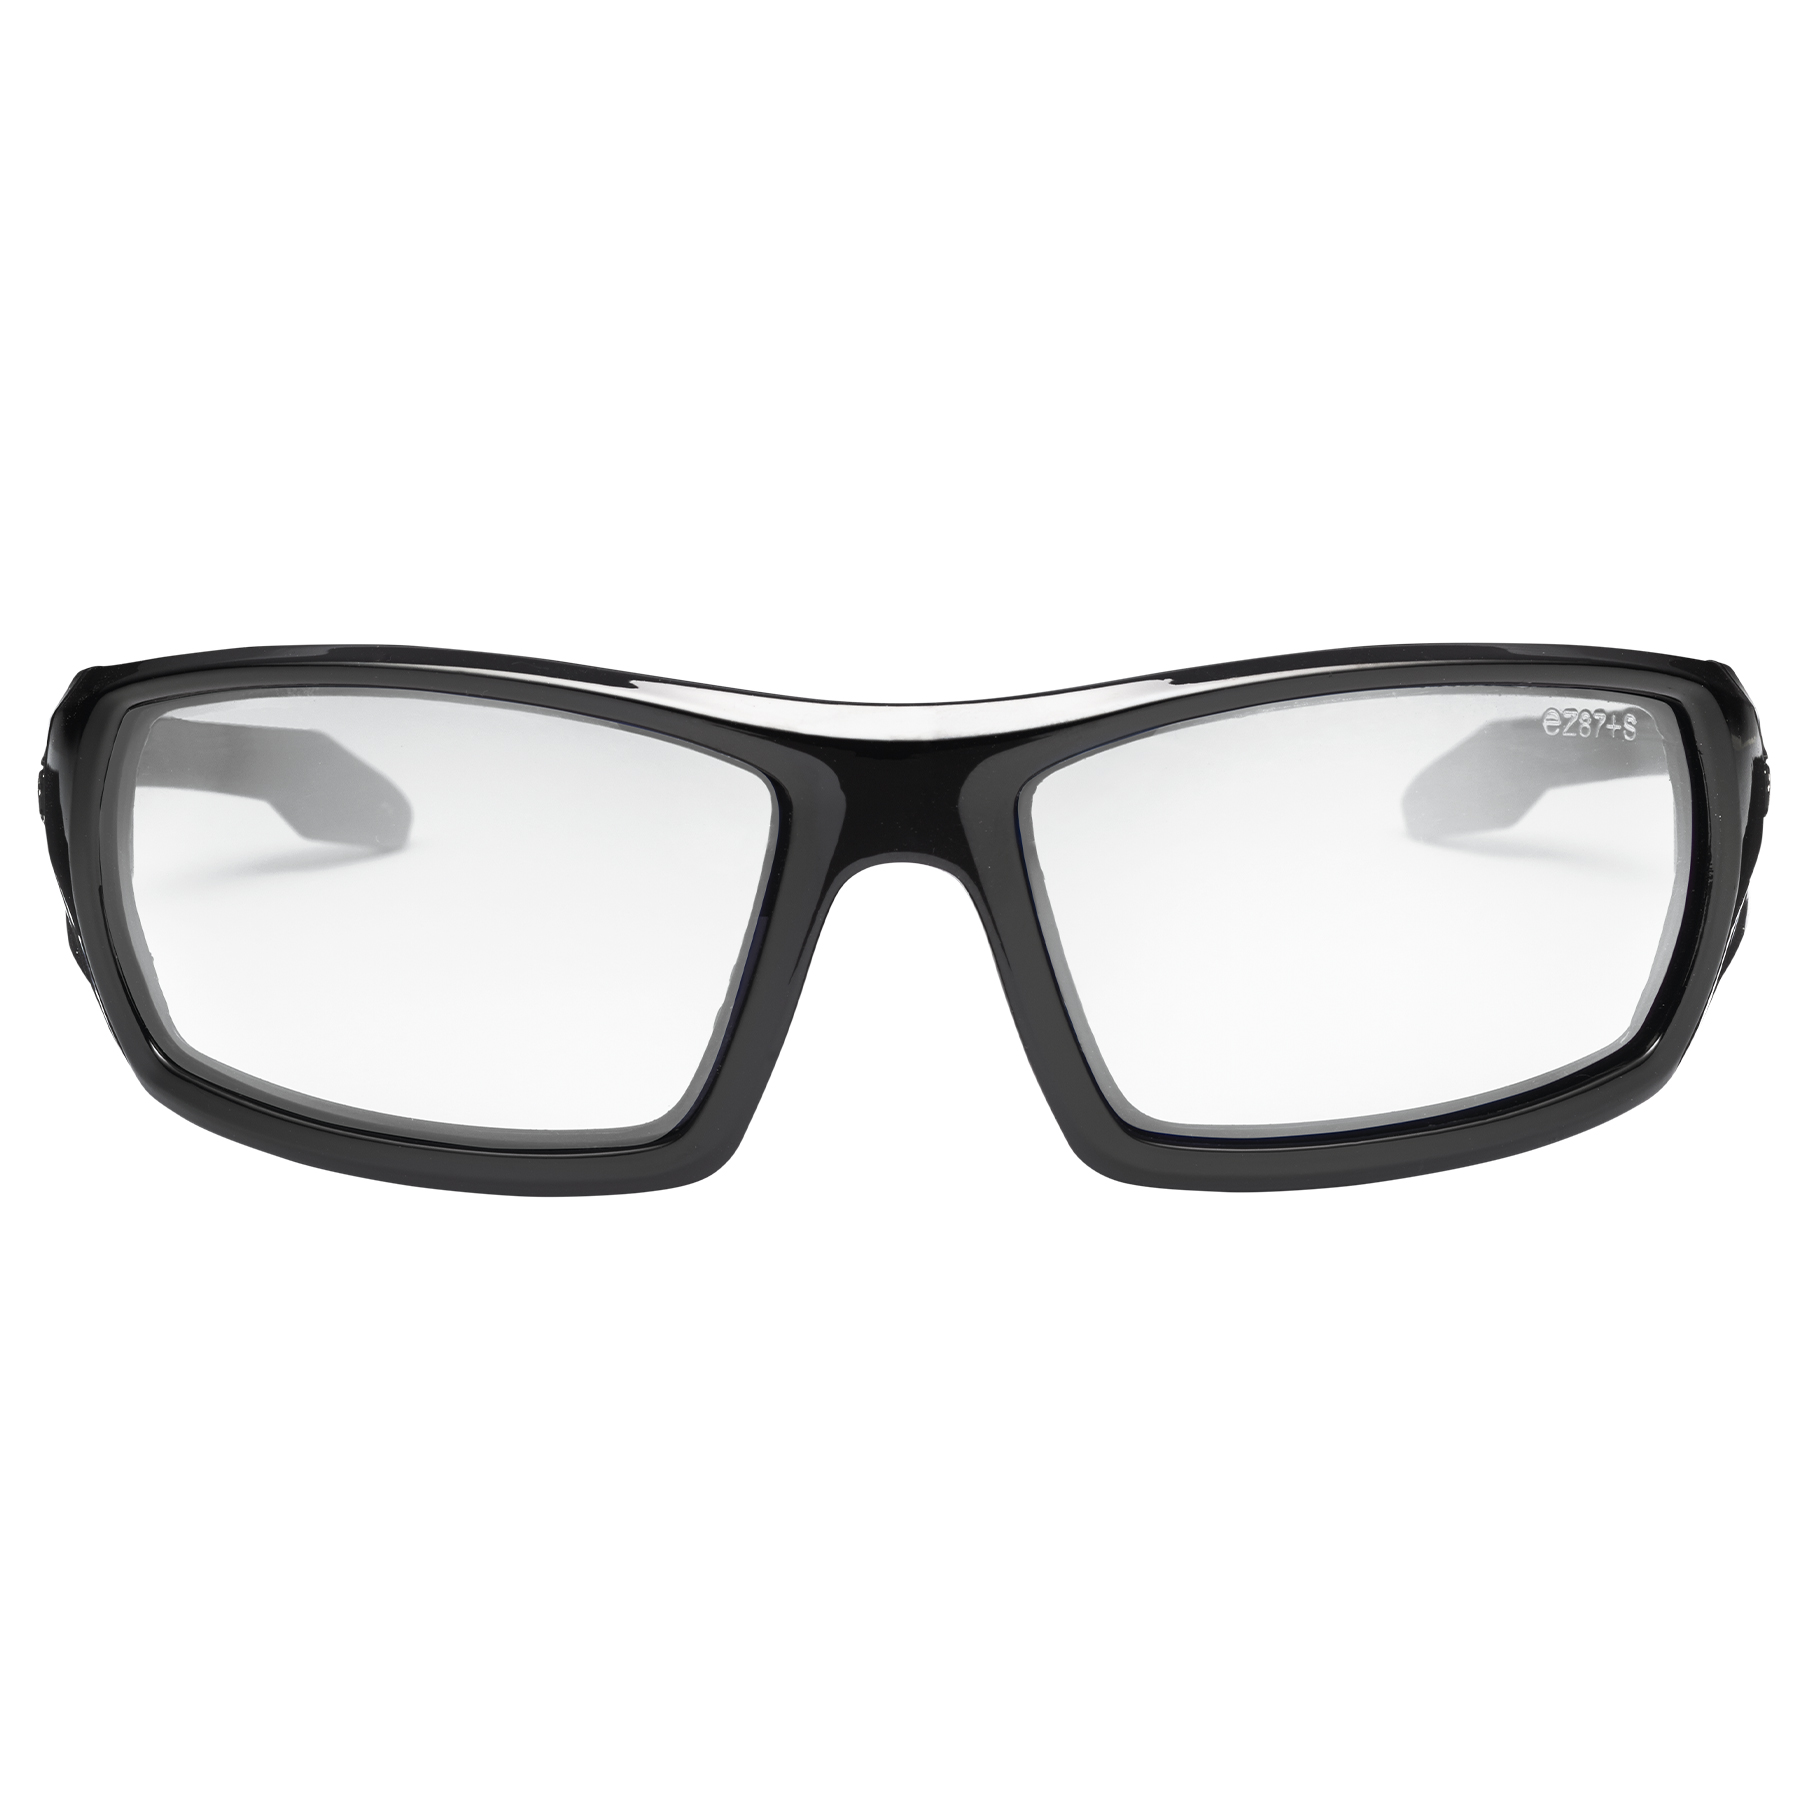 Odin Anti-Fog Safety Glasses, Sunglasses